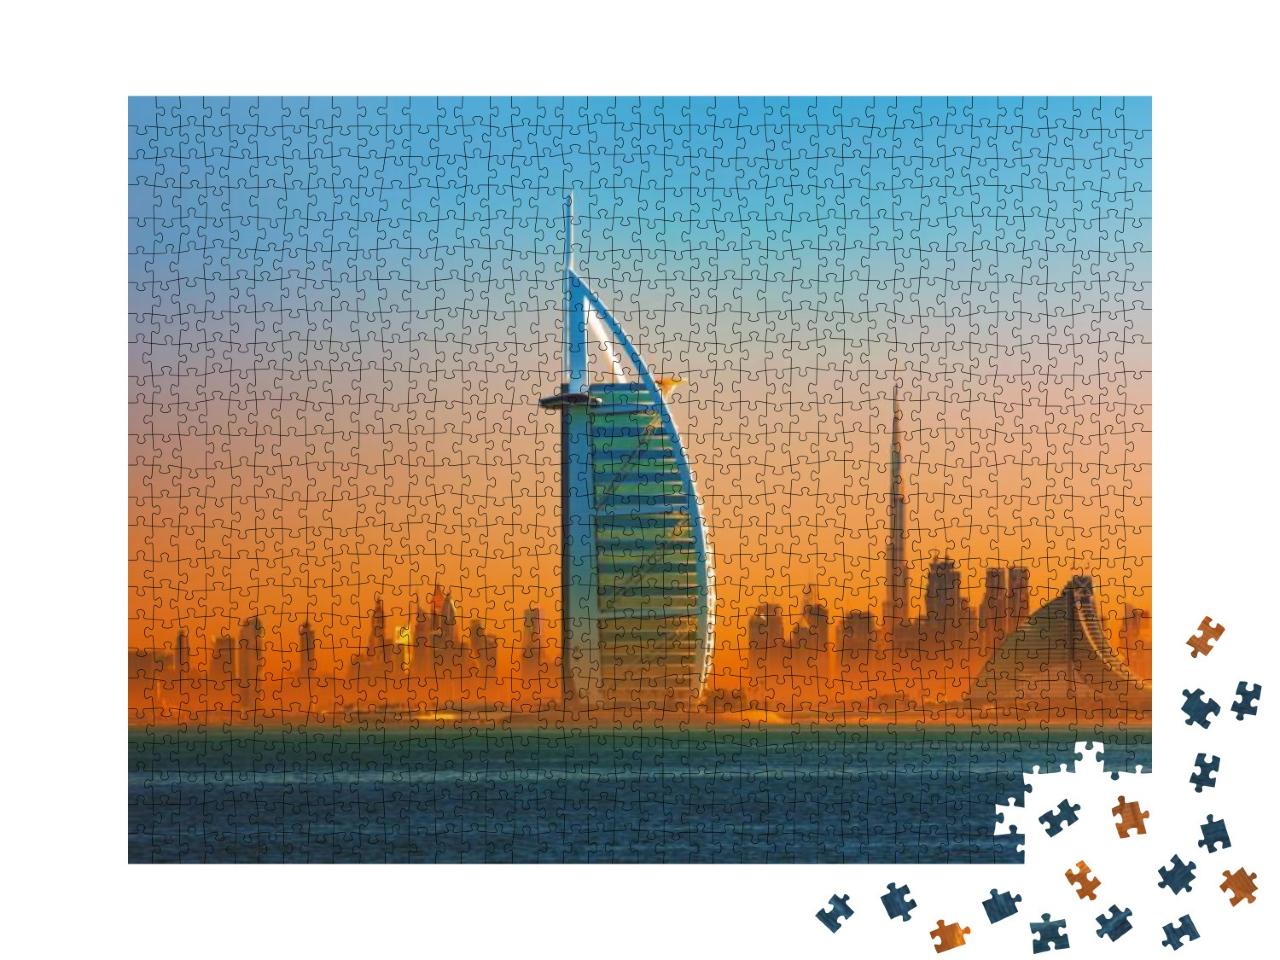 Puzzle 1000 Teile „Skyline des Stadtzentrums und der berühmte Jumeirah-Strand, Dubai“